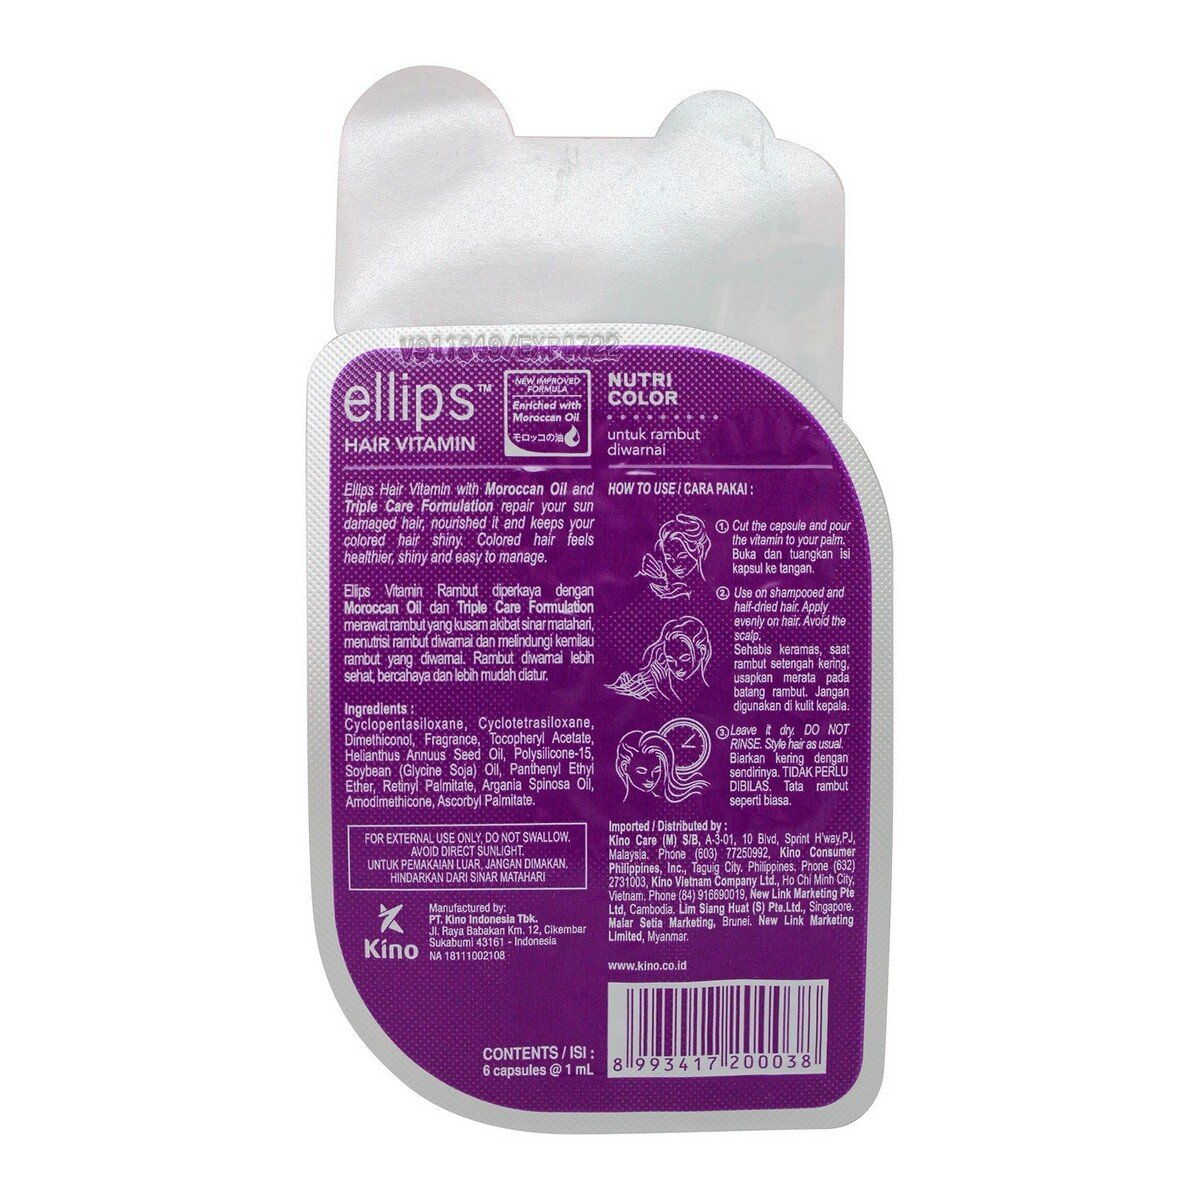 Ellips Hair Vitamin Nutri Color Blister 6pcs